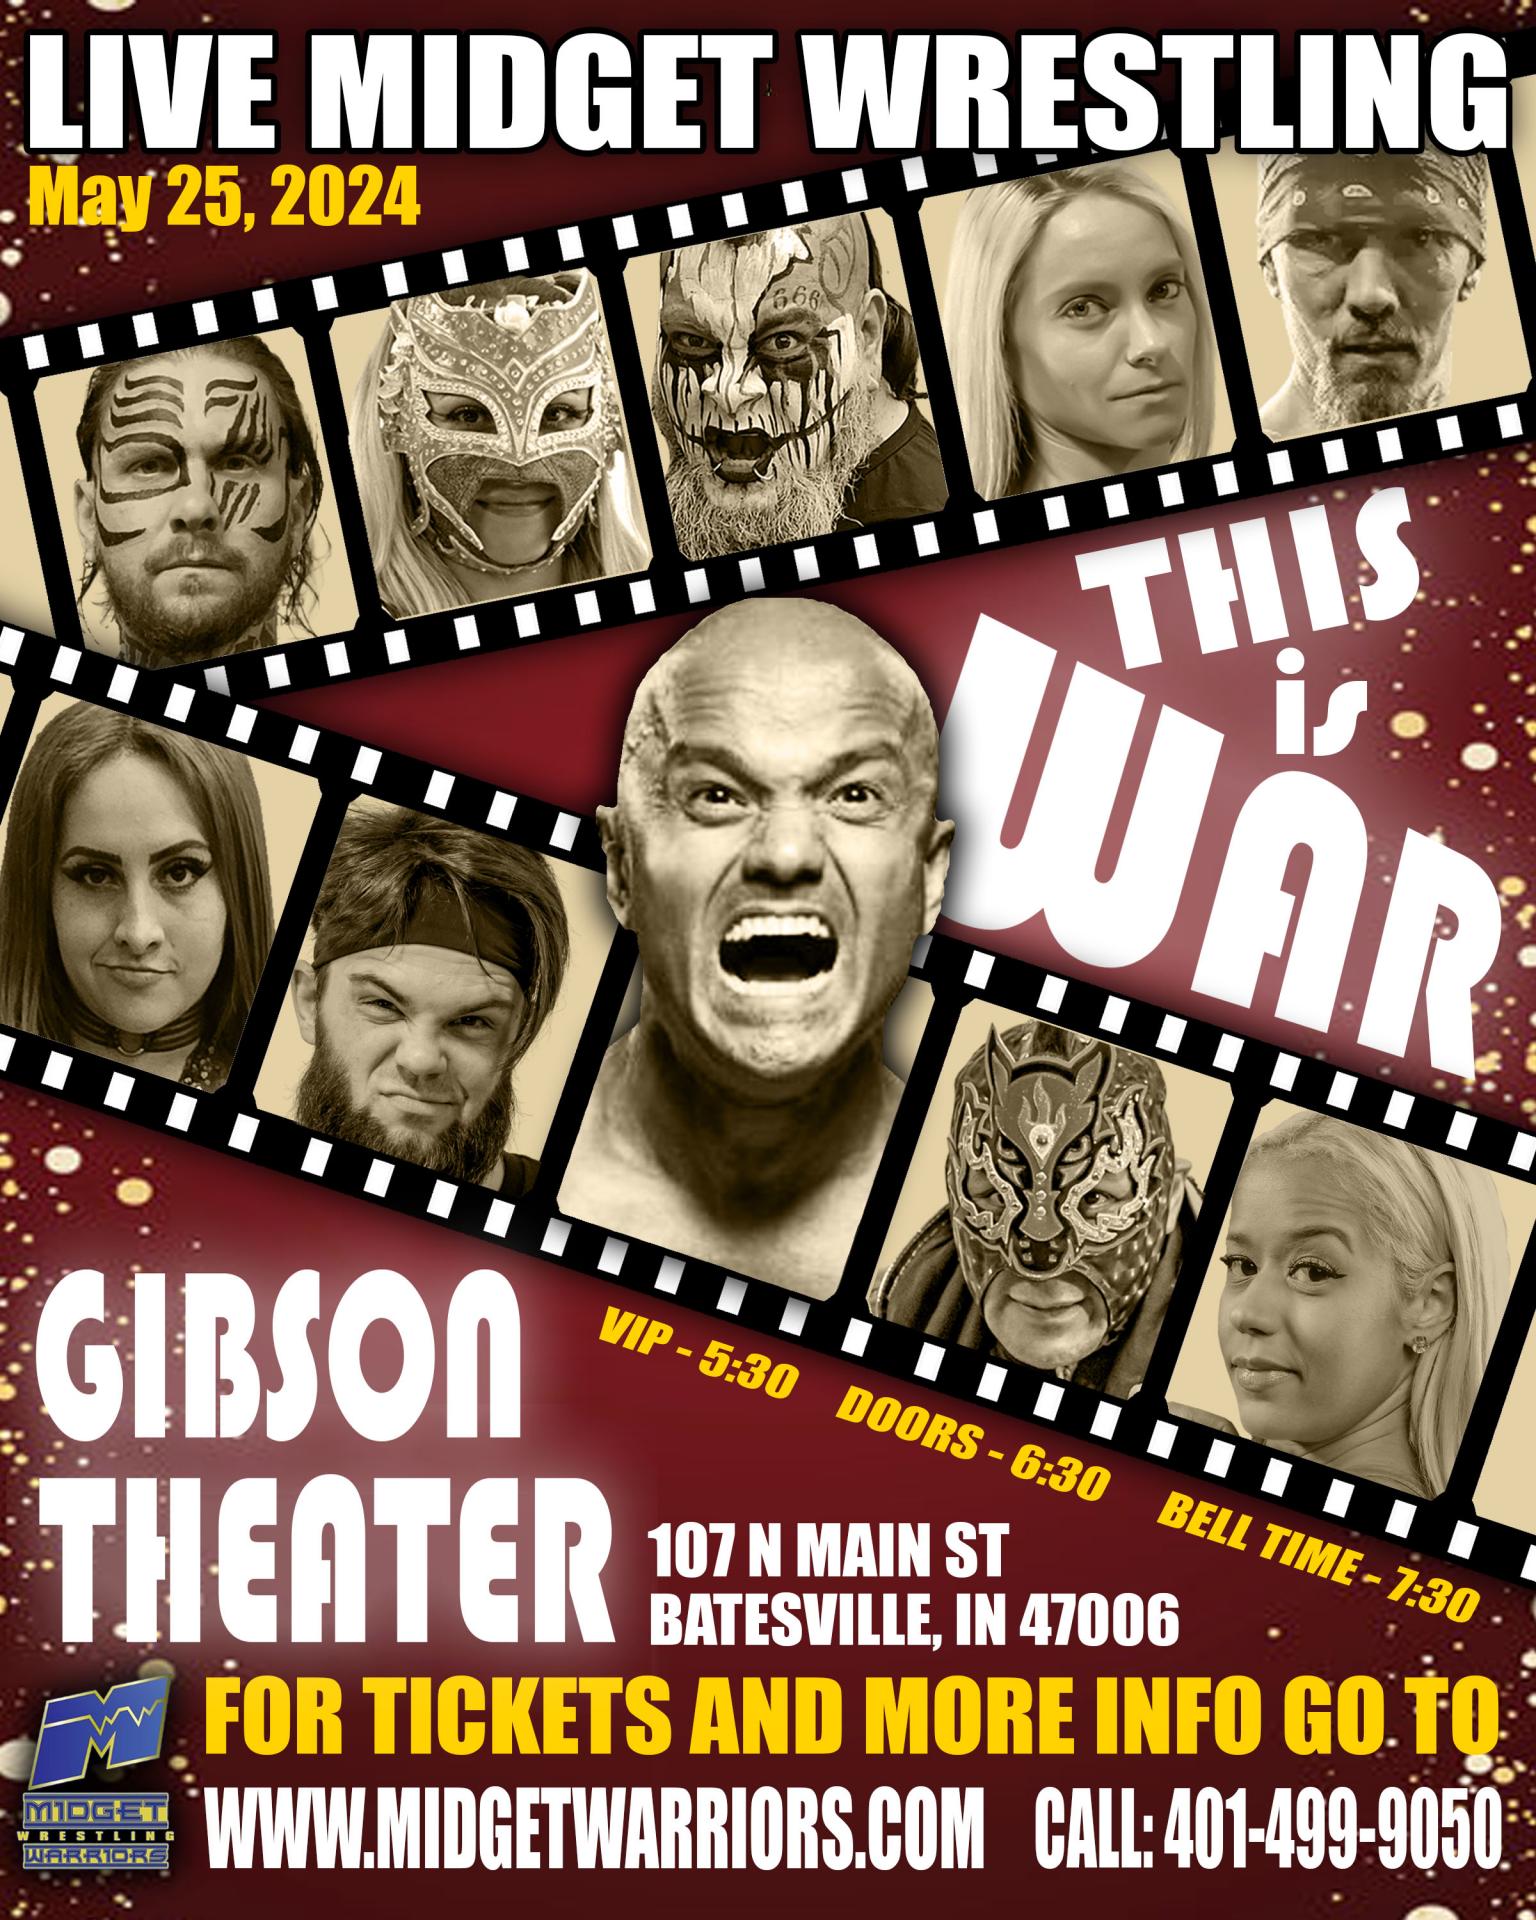 The Midget Wrestling Warriors This Is War Tour